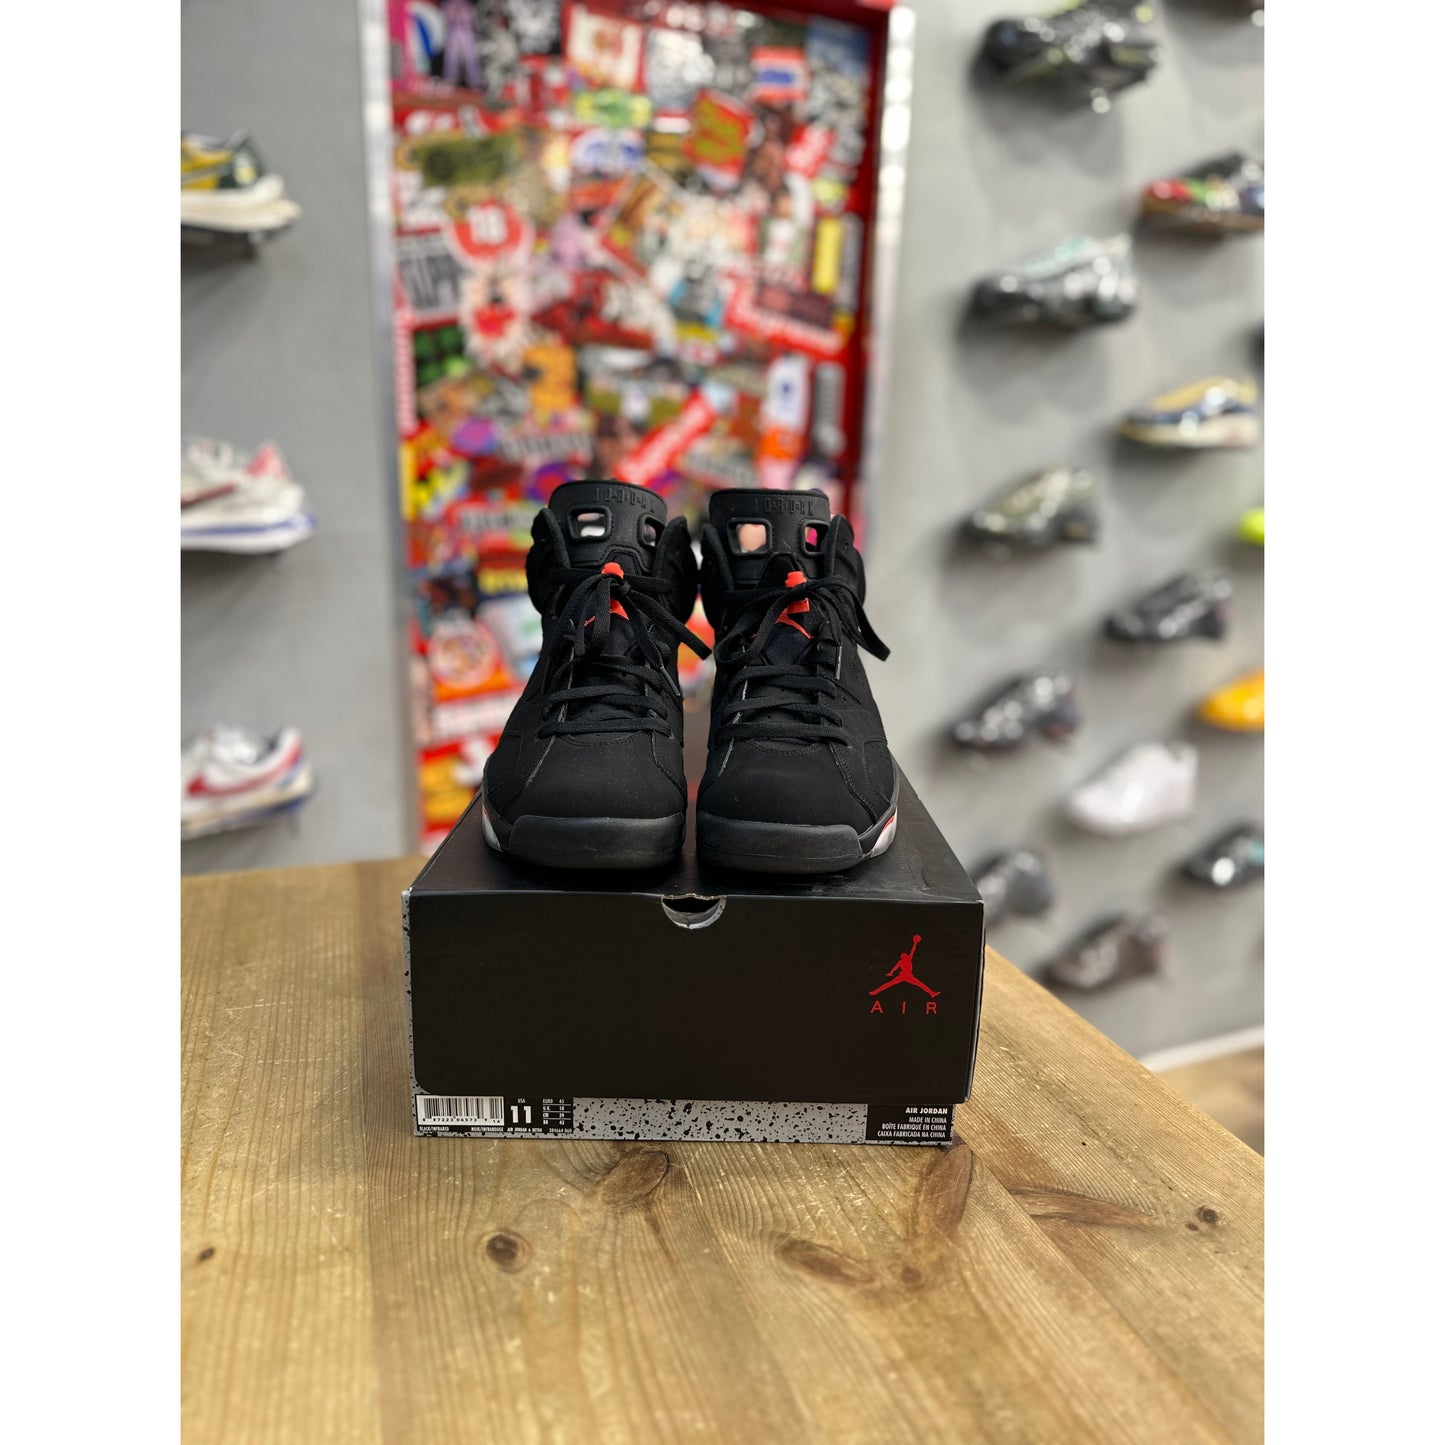 Jordan 6 Retro Black Infrared (2019) UK 10 by Jordan's from £235.00